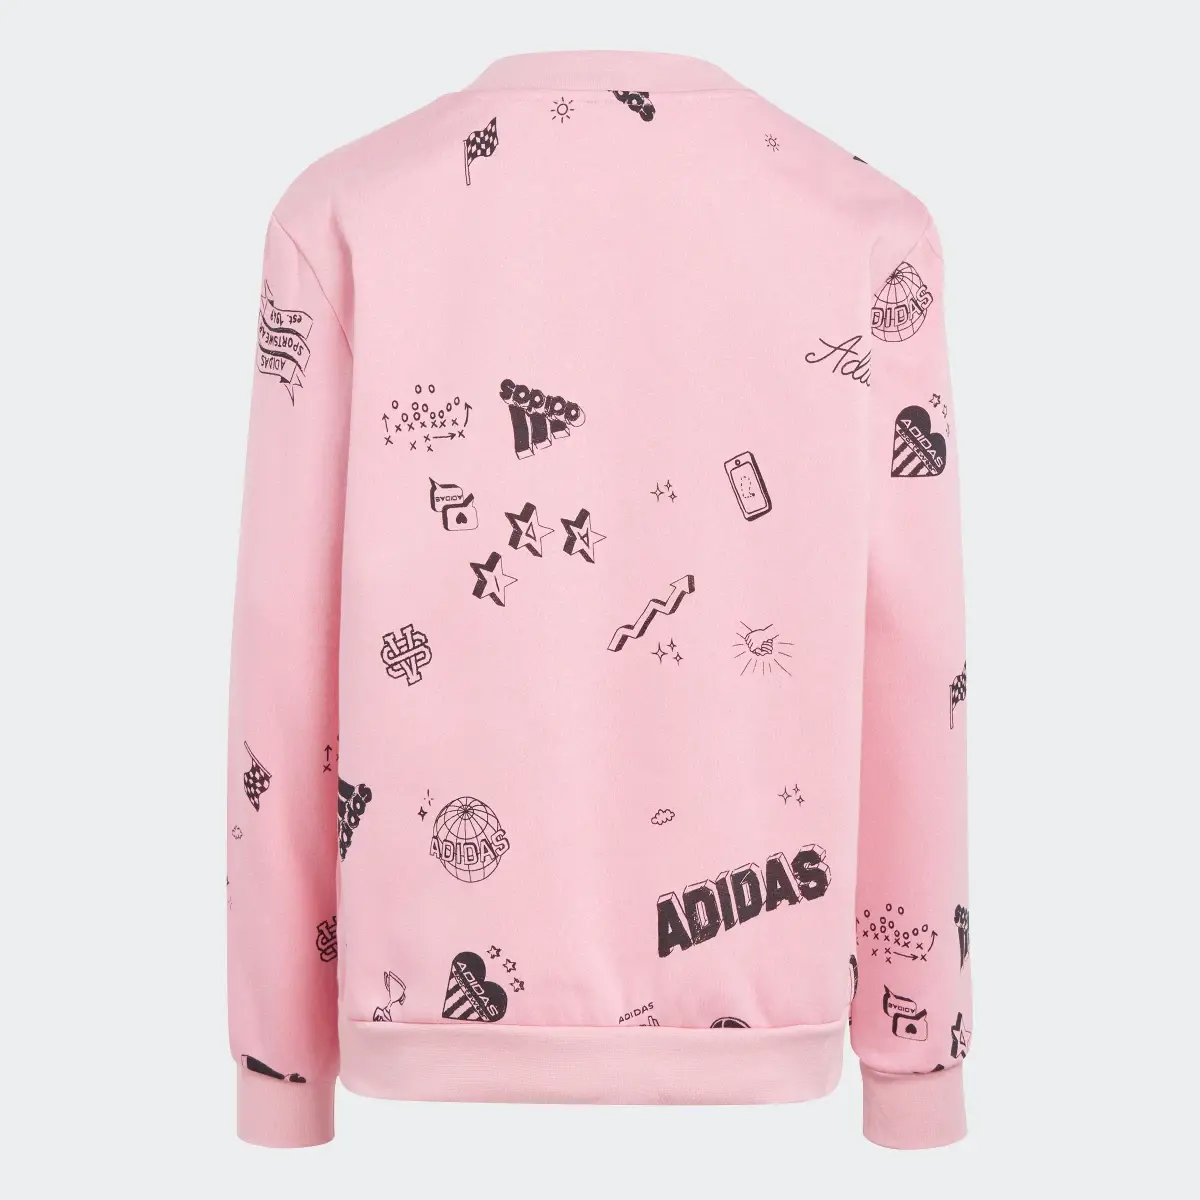 Adidas Brand Love Allover Print Kids Sweatshirt. 2